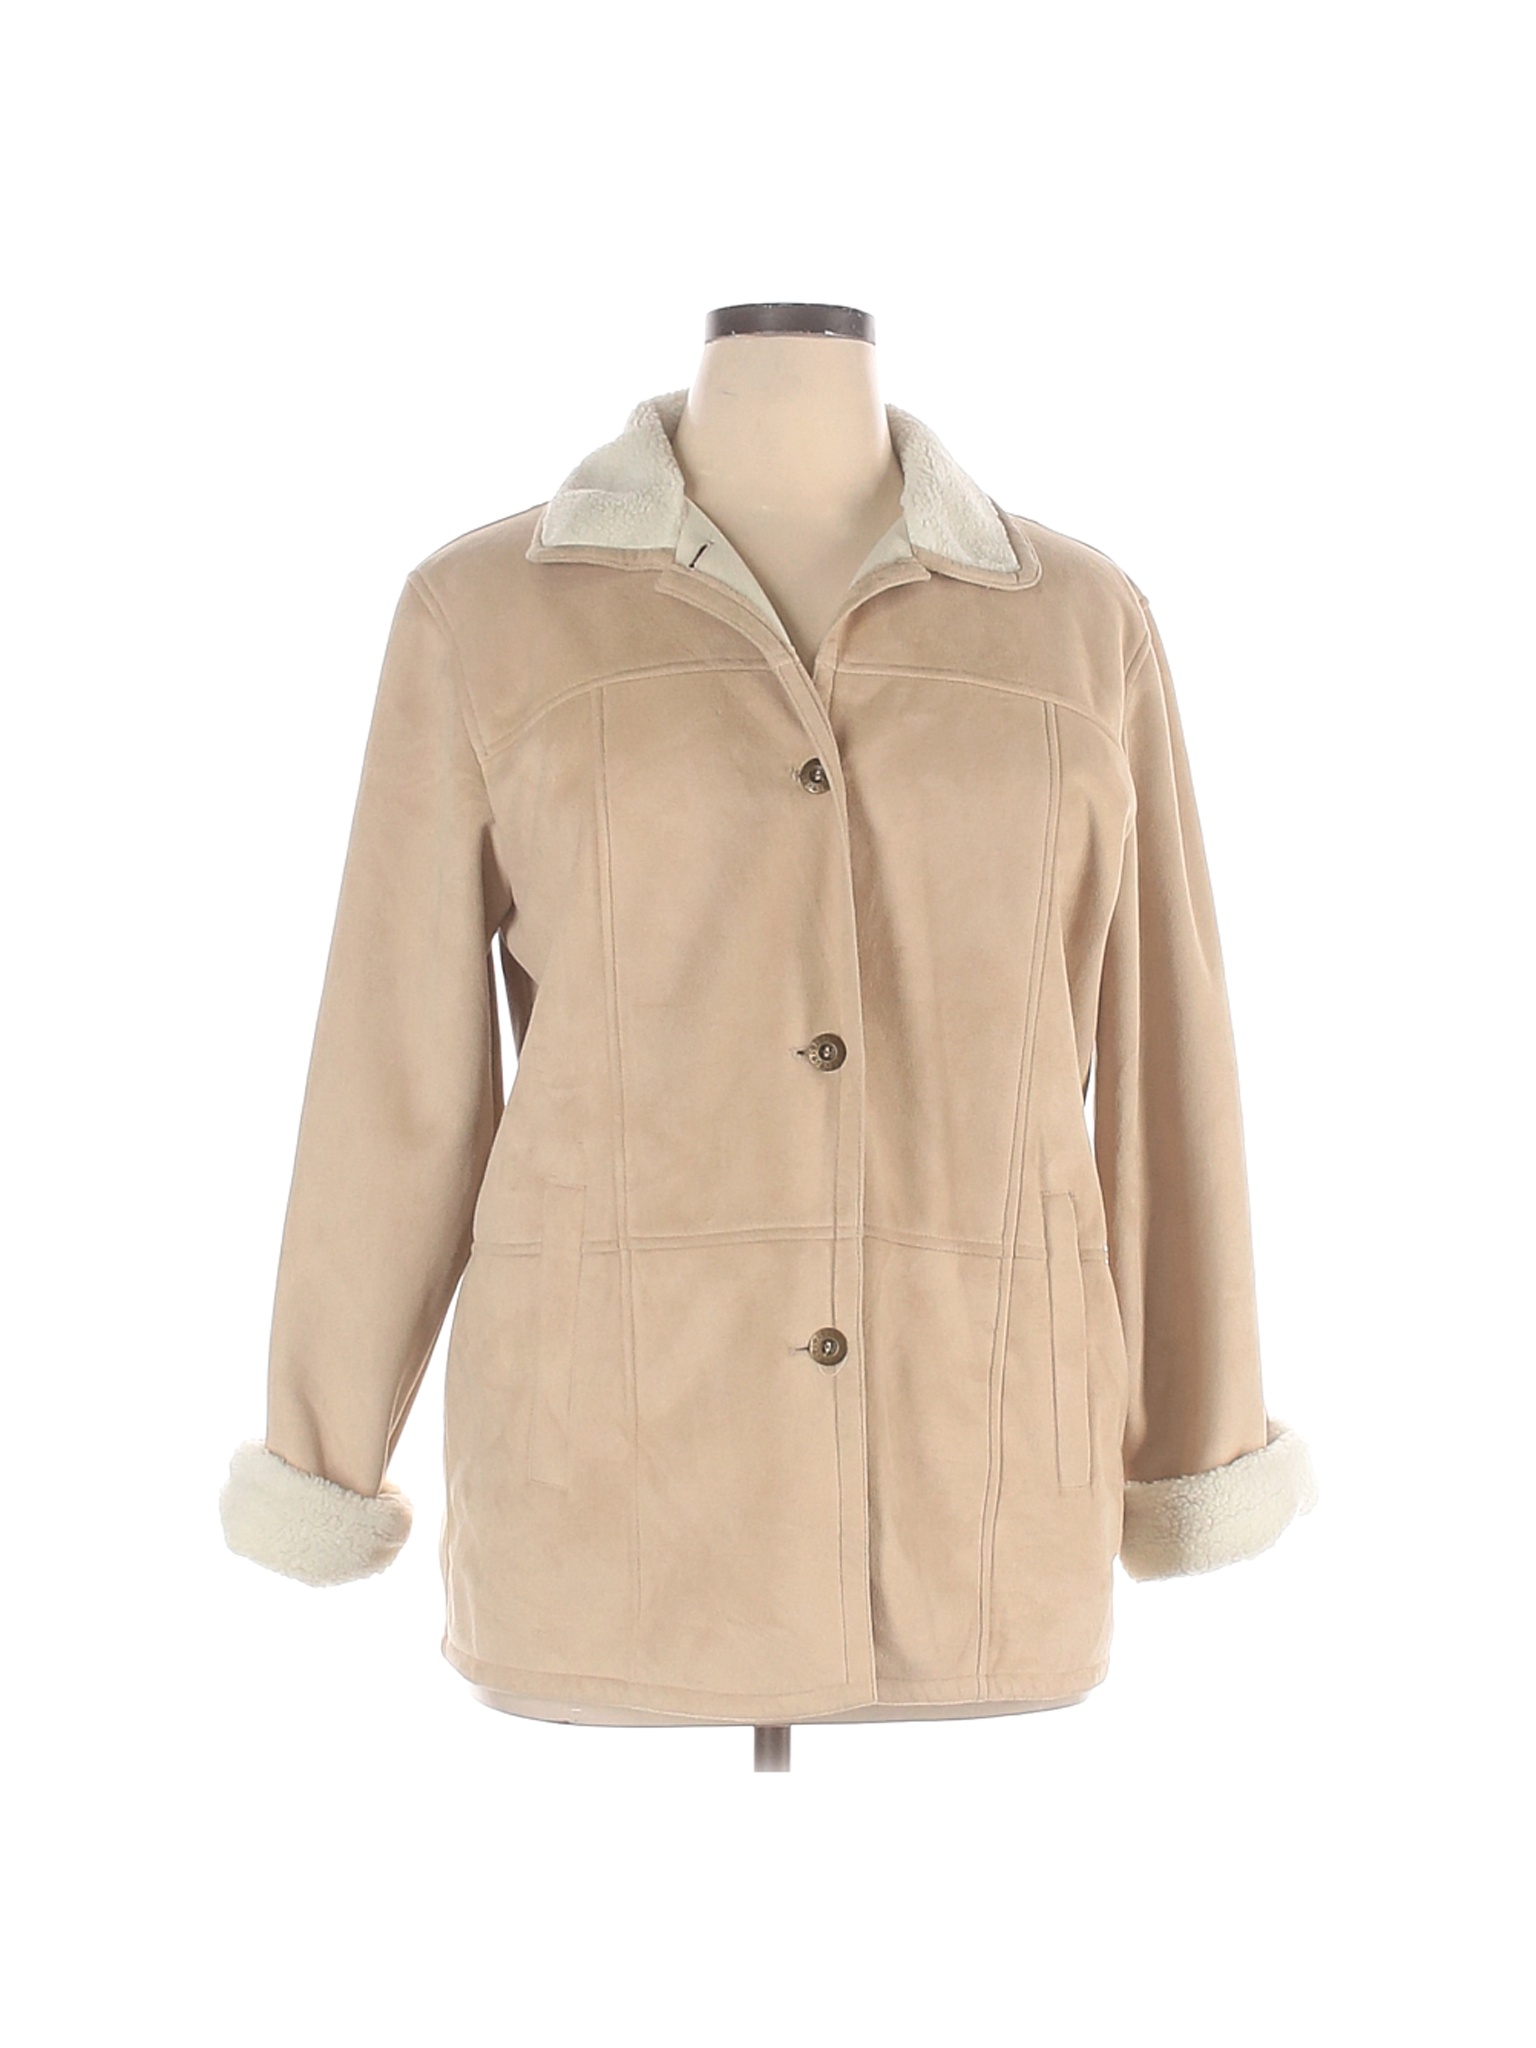 Alfred Dunner Women Brown Jacket 14 | eBay